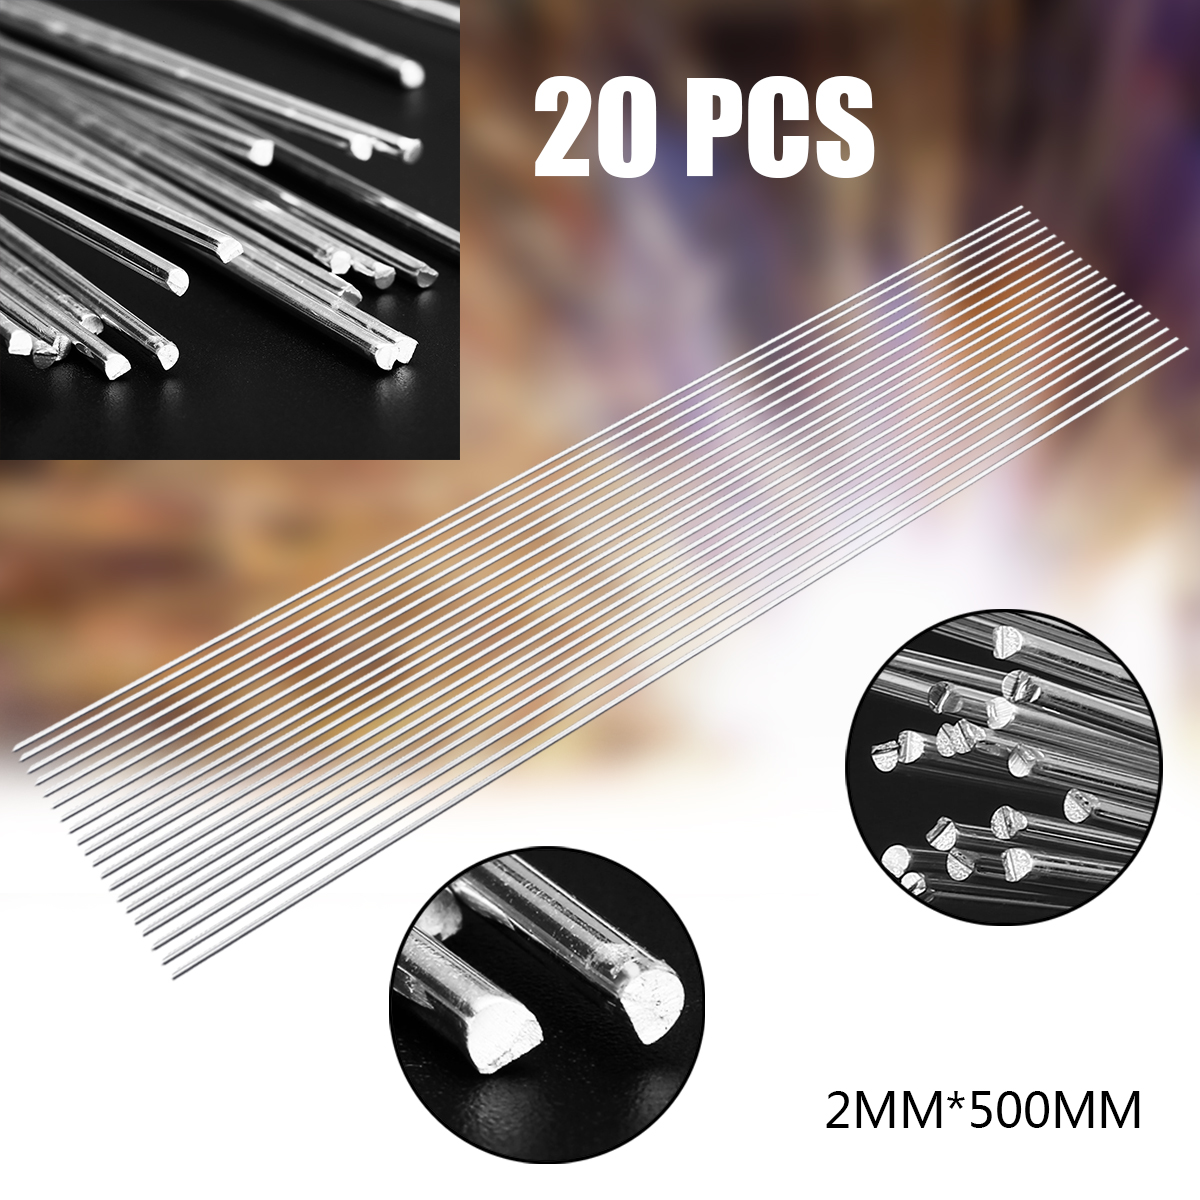 20pcs 2mm Diam Aluminum Welding Rods Low Temperature Wire Soldering Rod Set for Argon Arc Welding and Filling Material